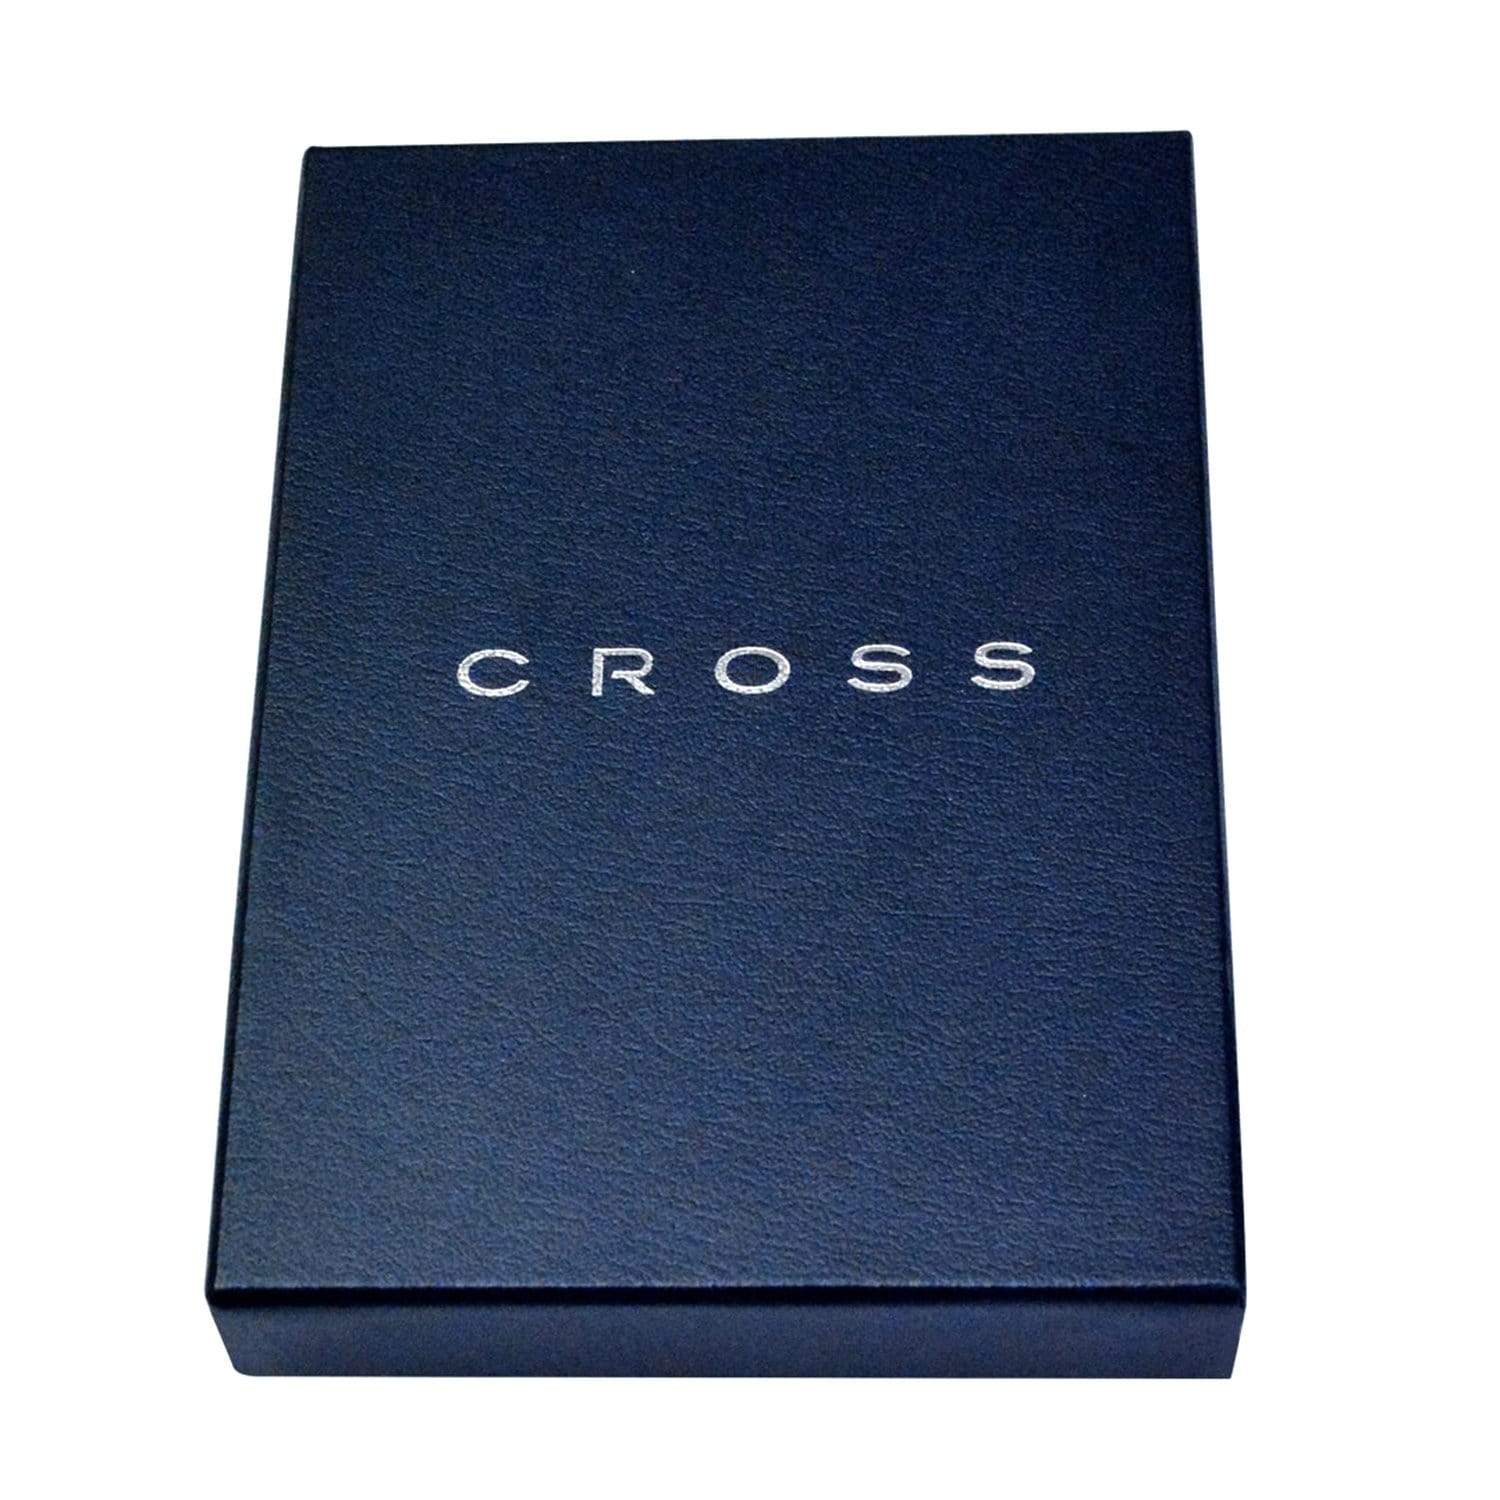 Cross Classic Century Padfolio with Pen - Black - AC018046-1-1 - Jashanmal Home